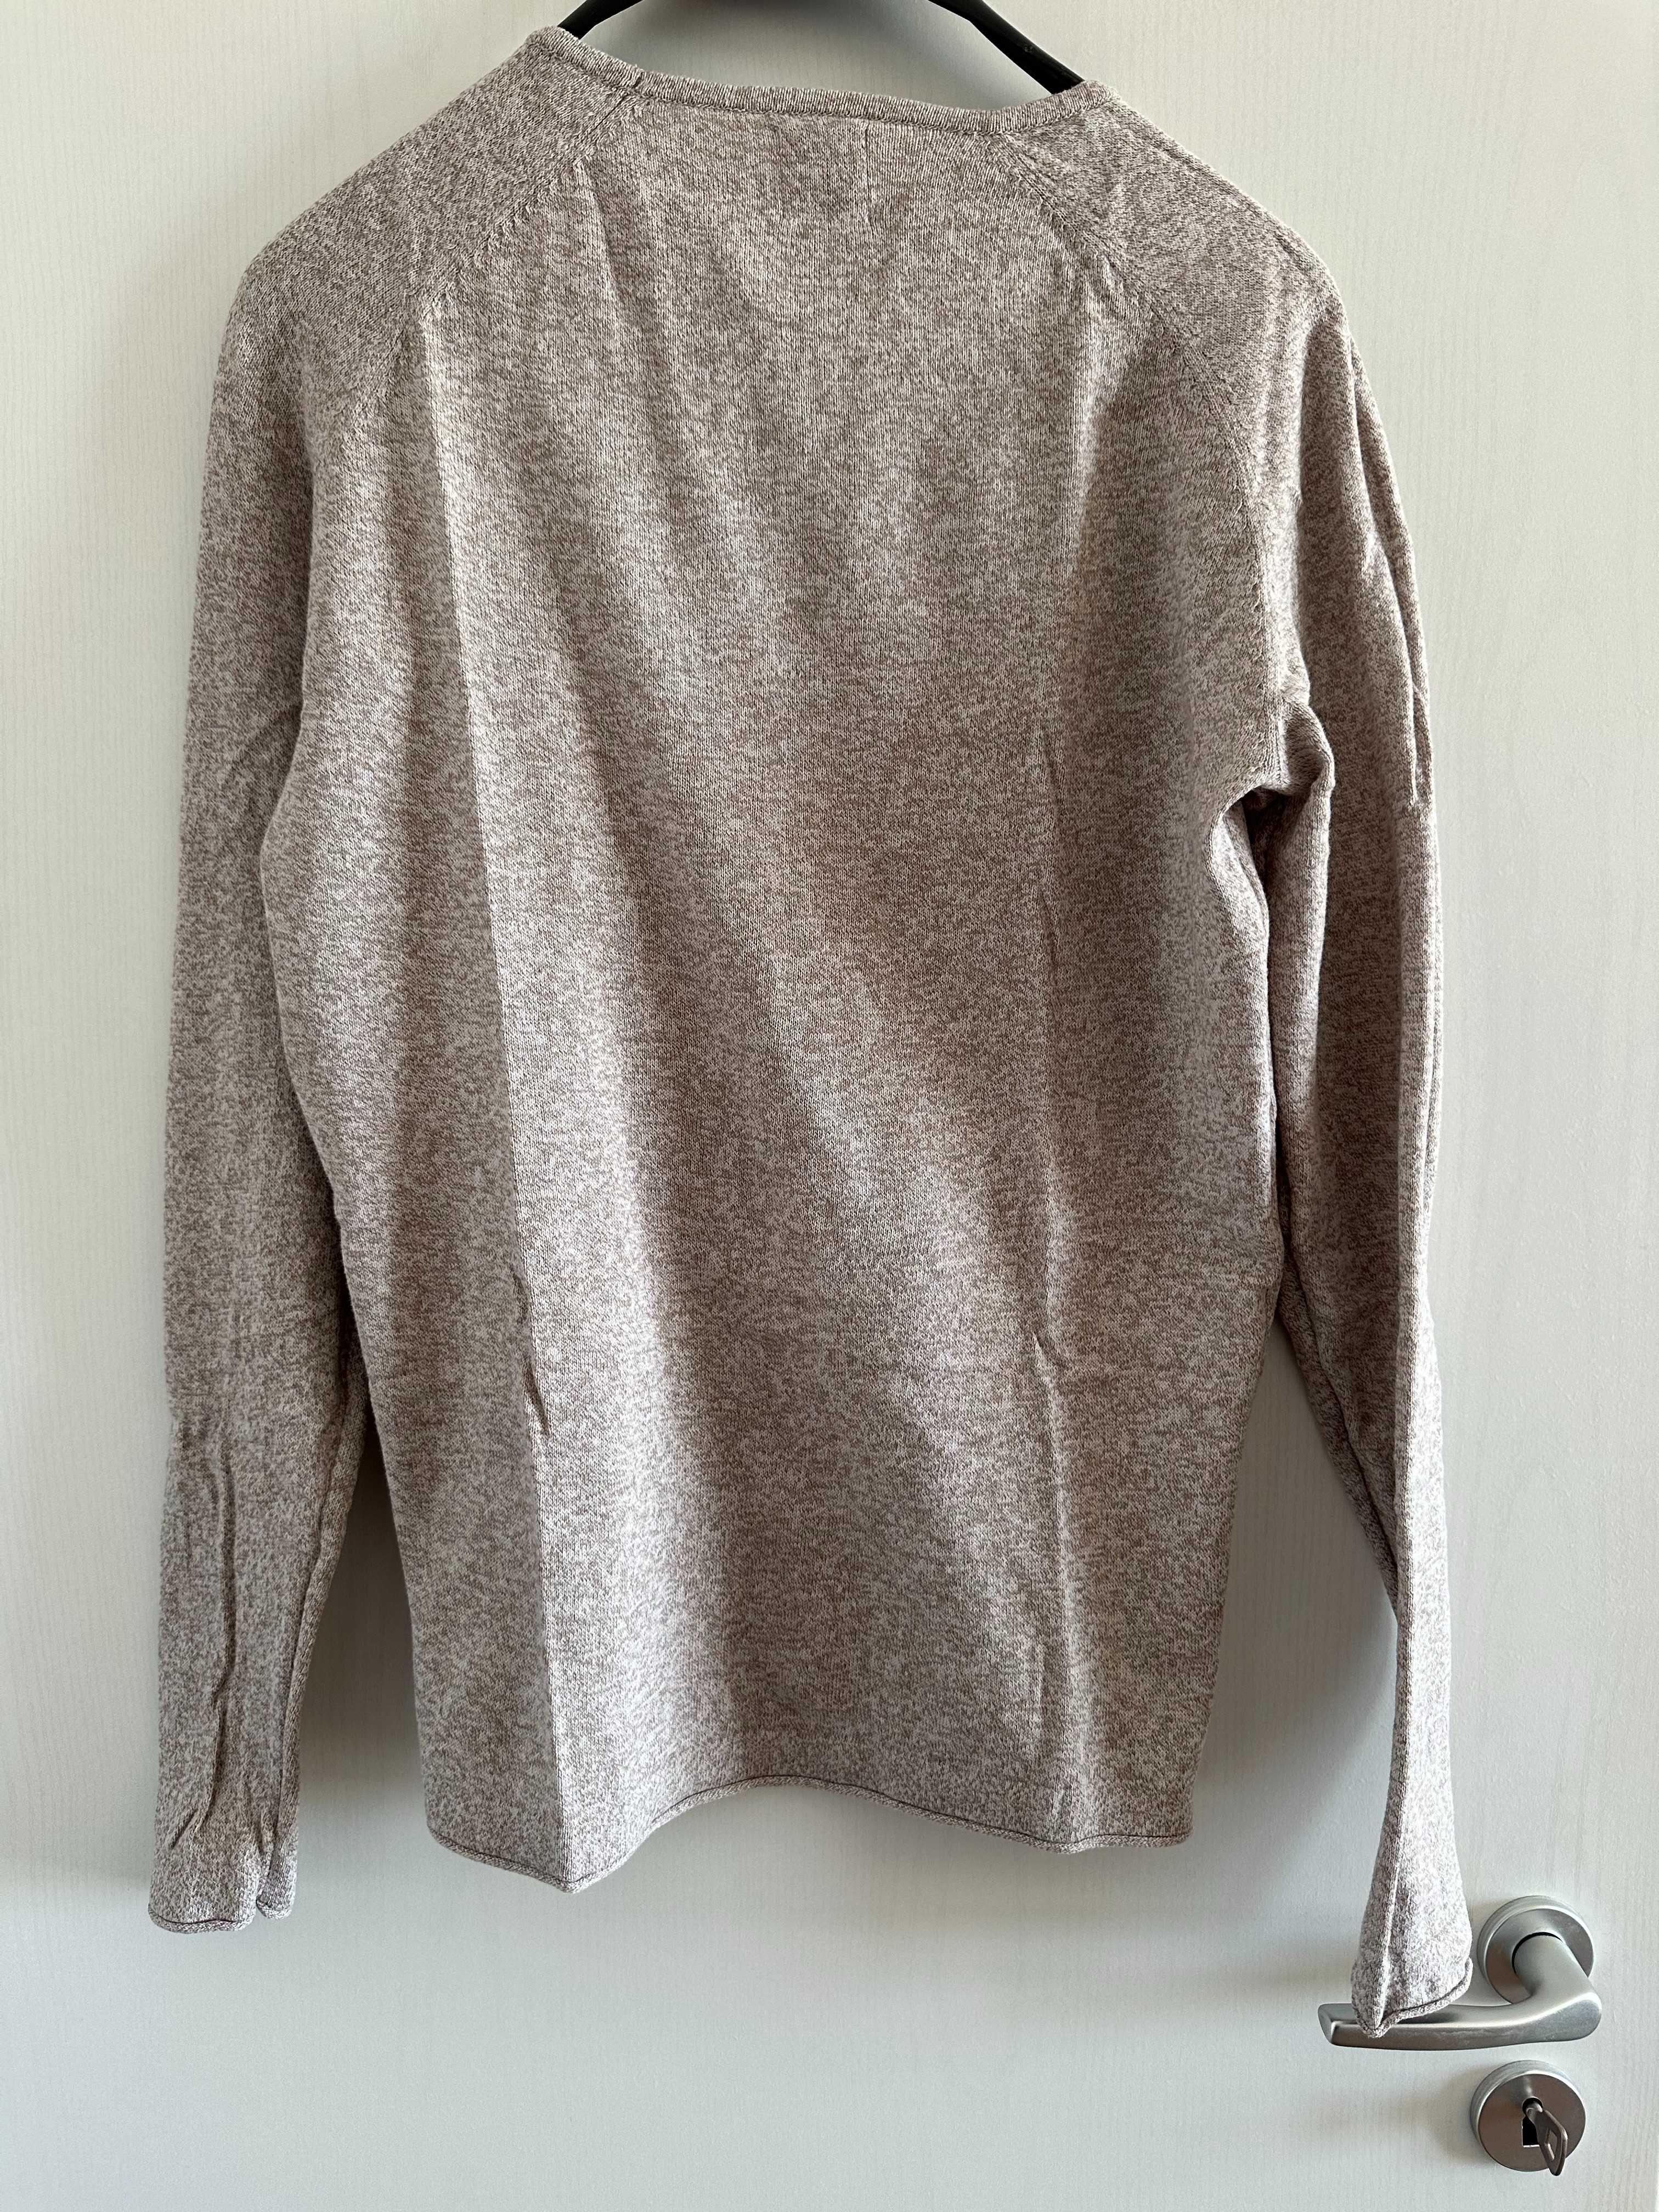 pulover Zara, marime EUR L USAL MEX 42